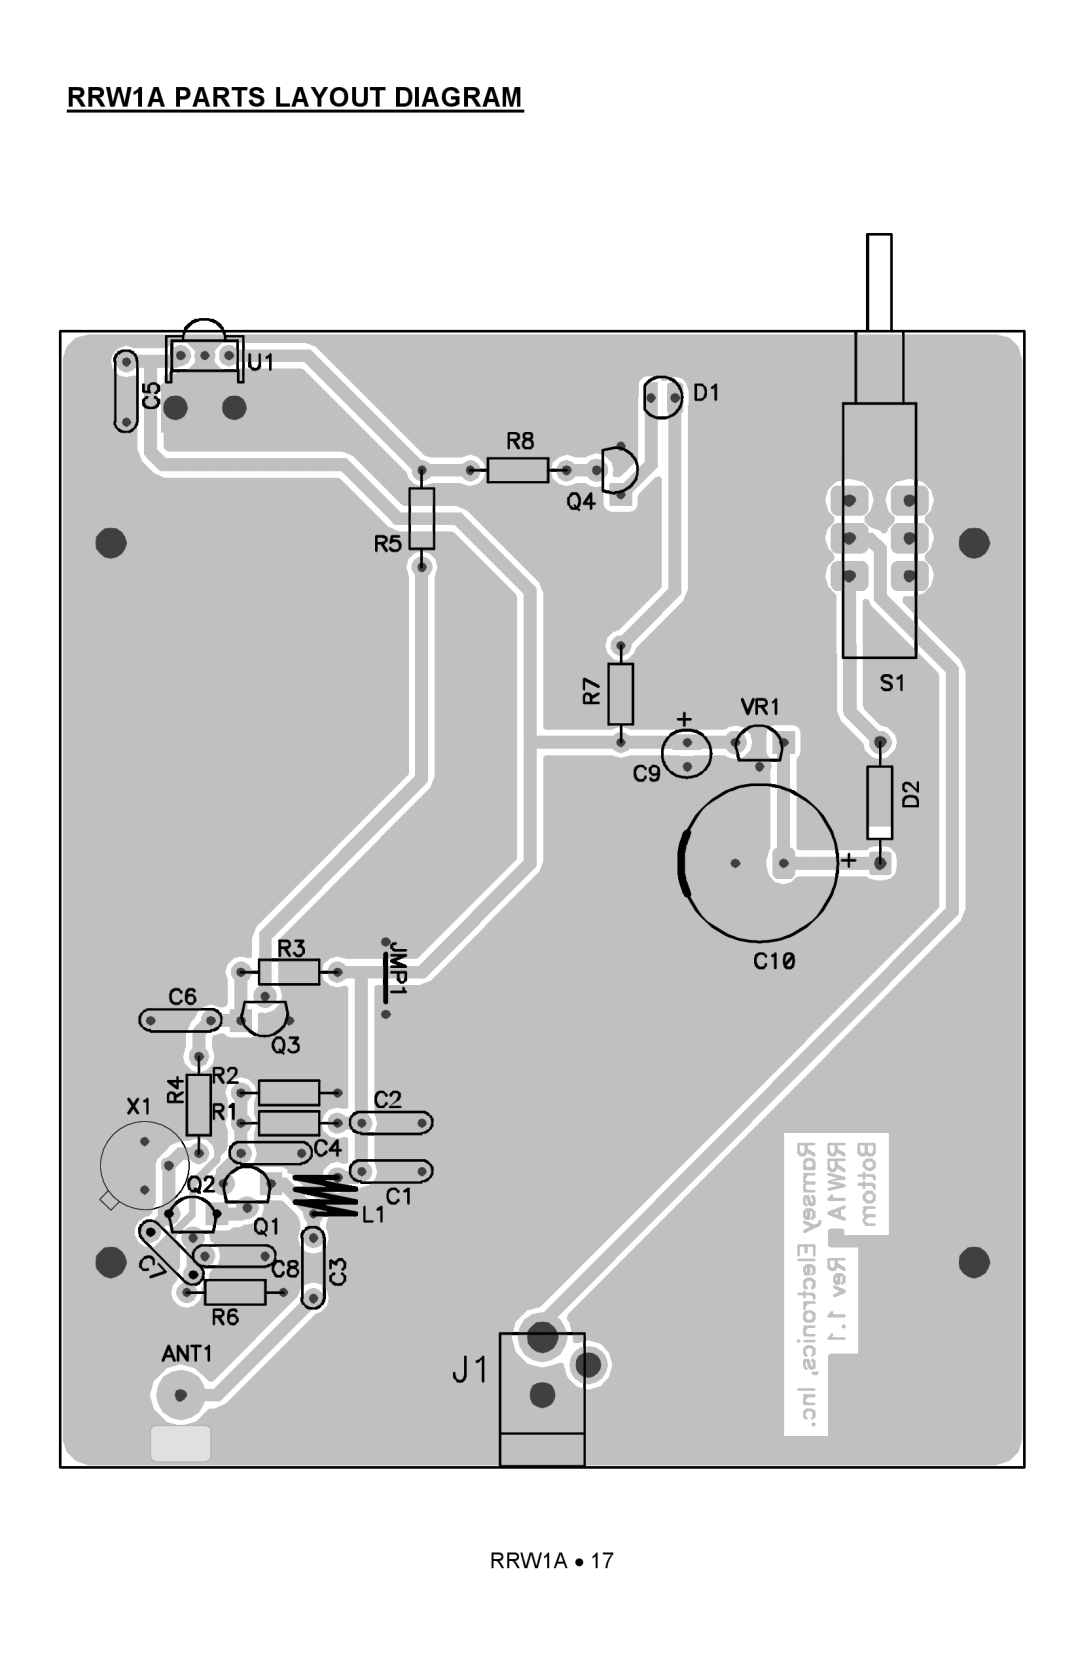 Ramsey Electronics manual RRW1A PARTS LAYOUT DIAGRAM 